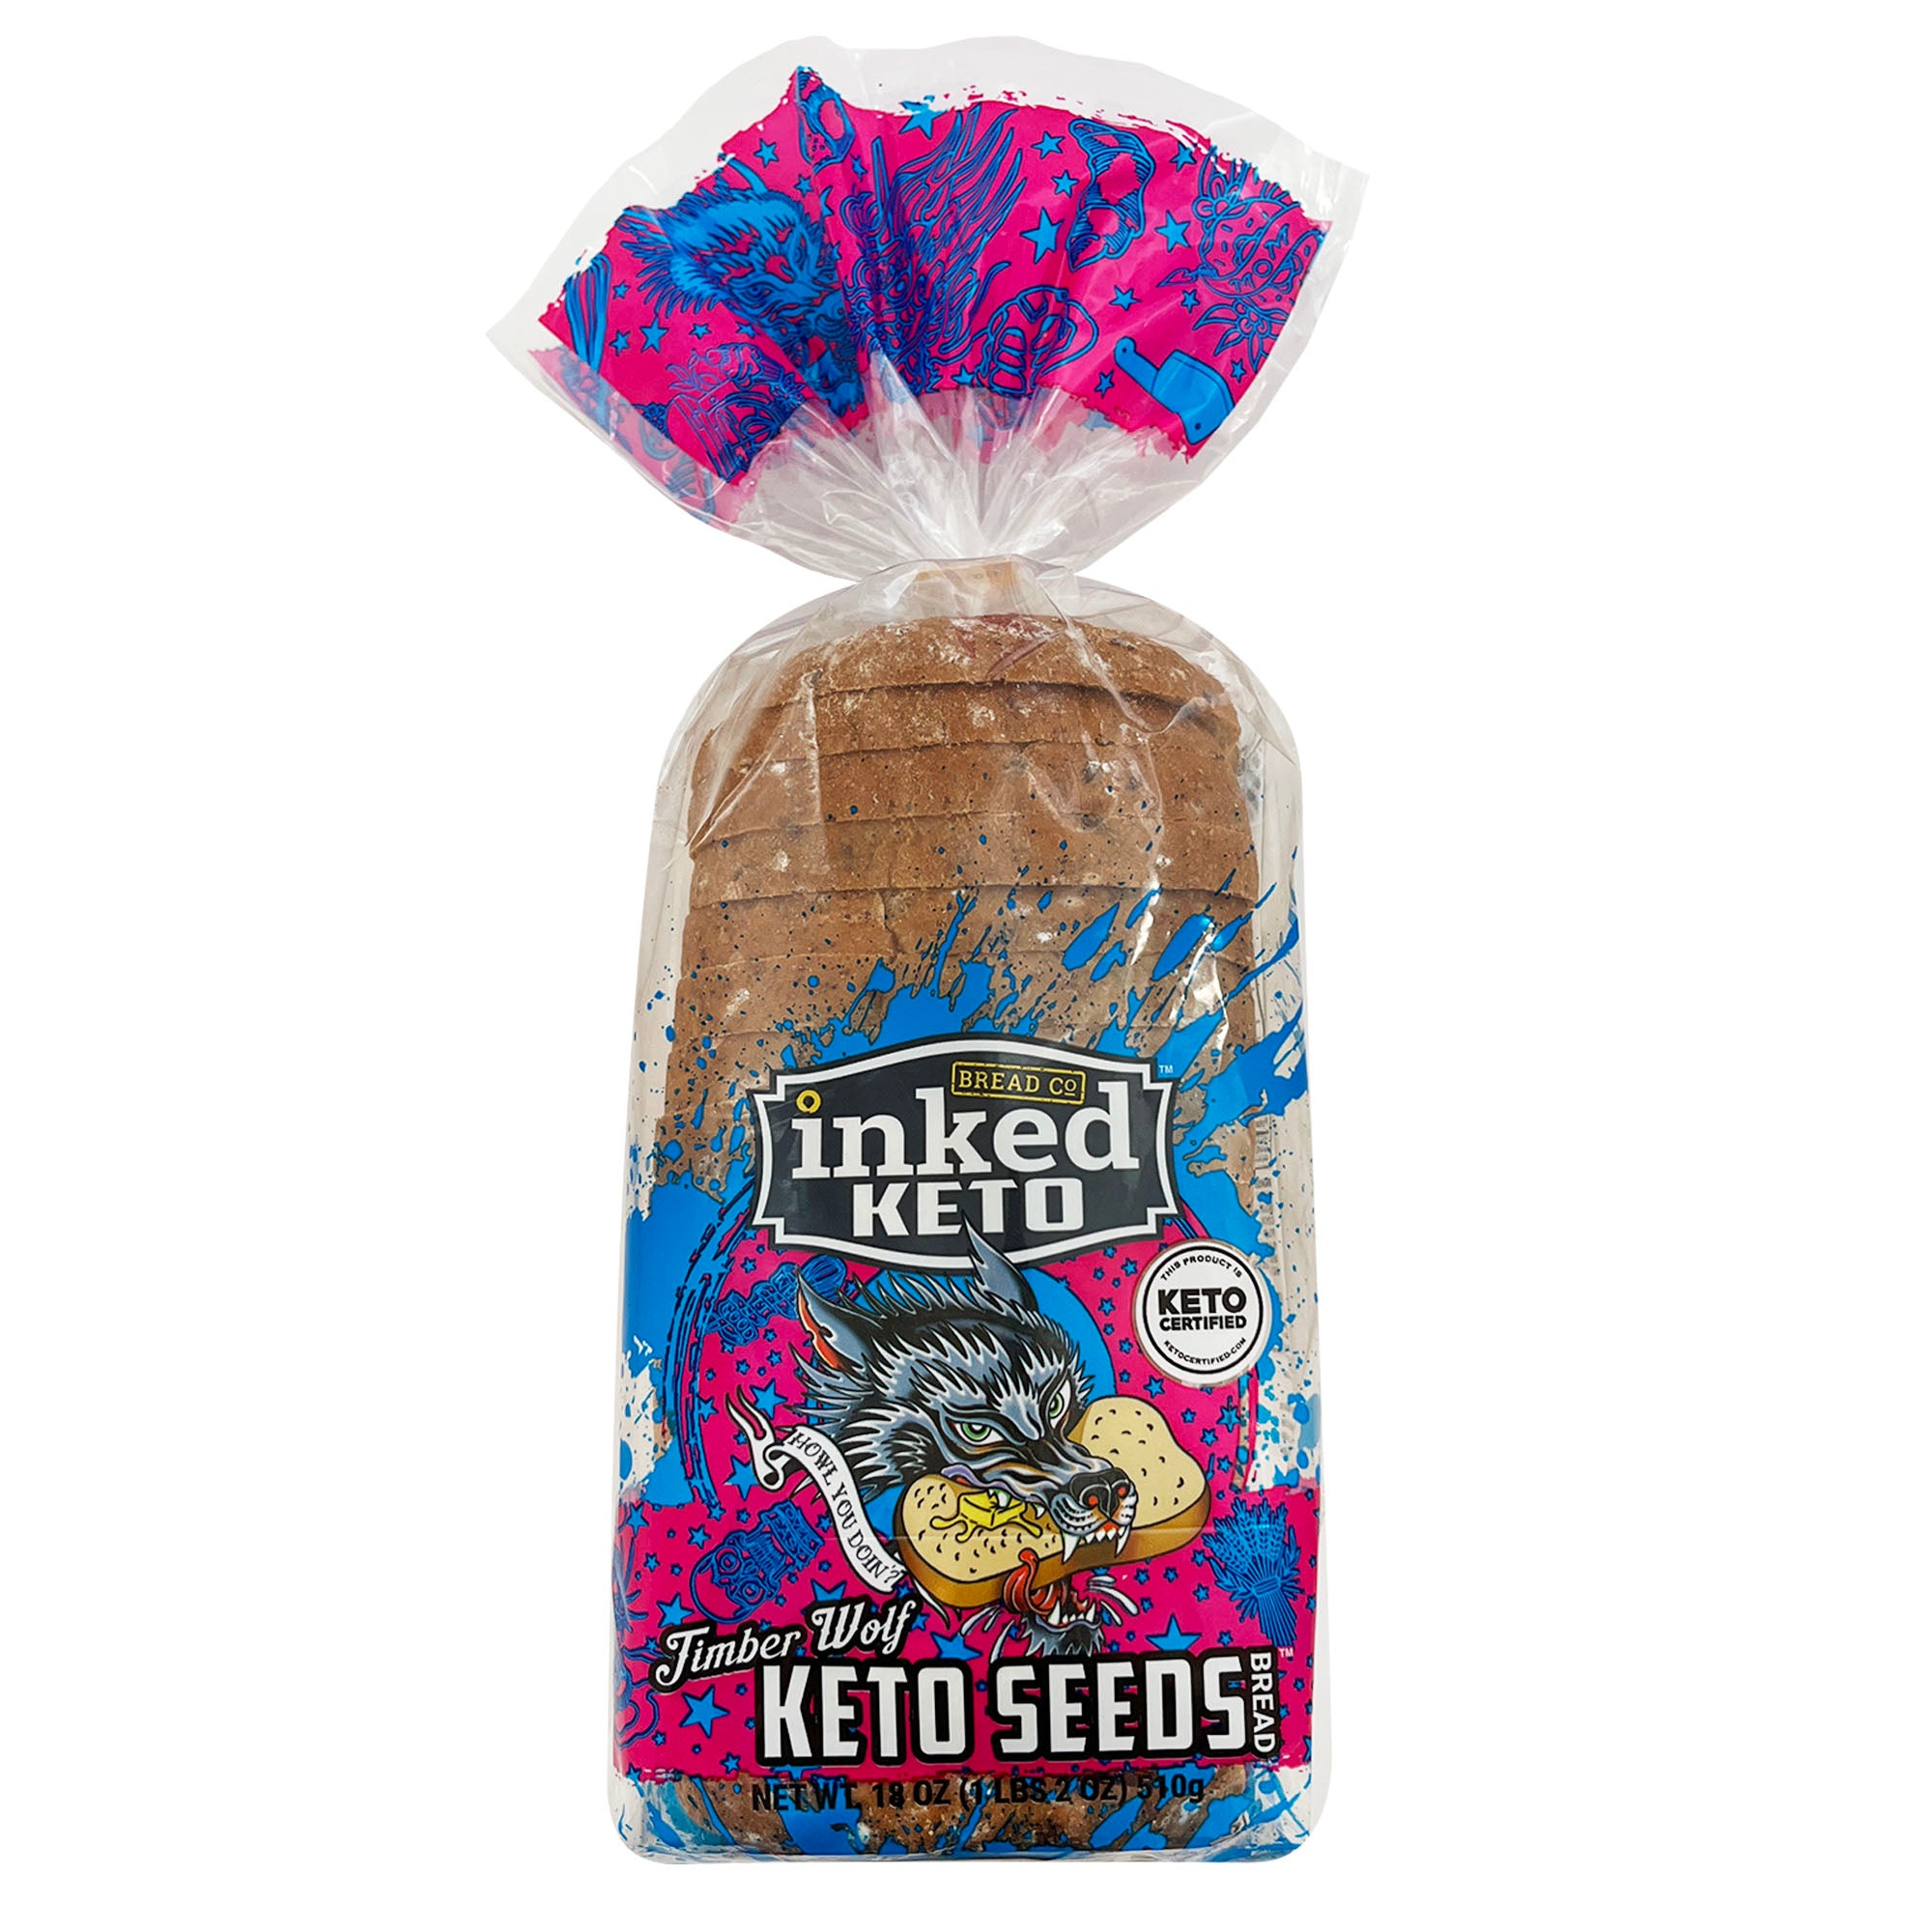 (Keto) Timber Wolf Keto Seeds Bread